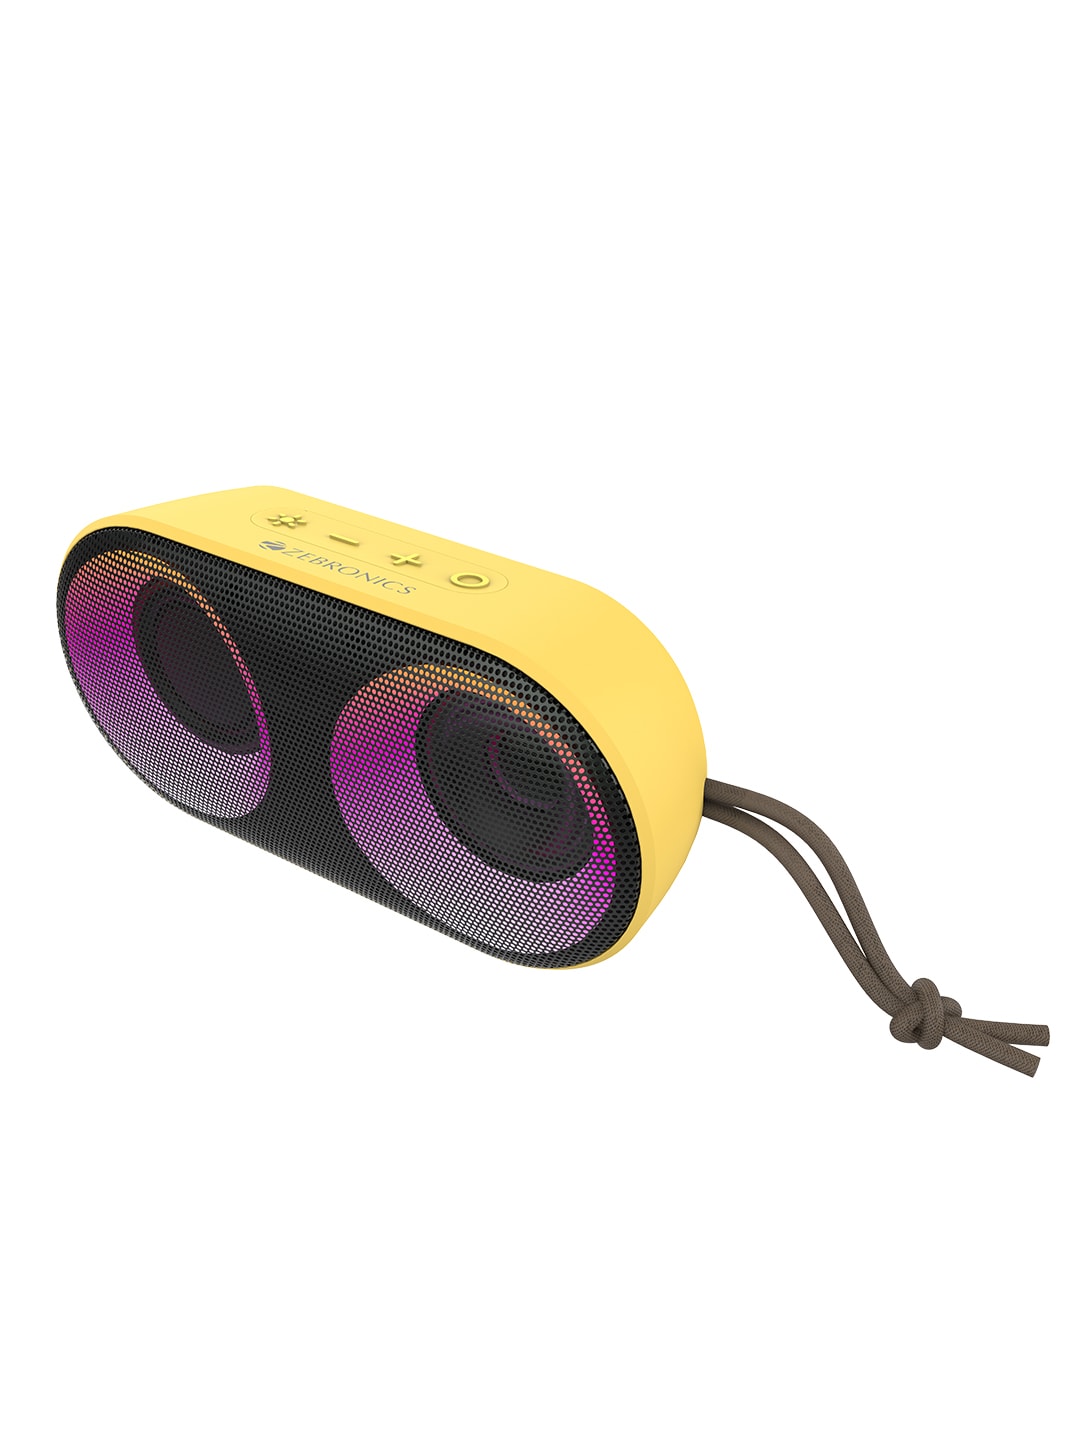 ZEBRONICS ZEB-MUSIC BOMB X MINI Bluetooth 5.0 speaker with IPX5 Waterproof - Yellow Price in India